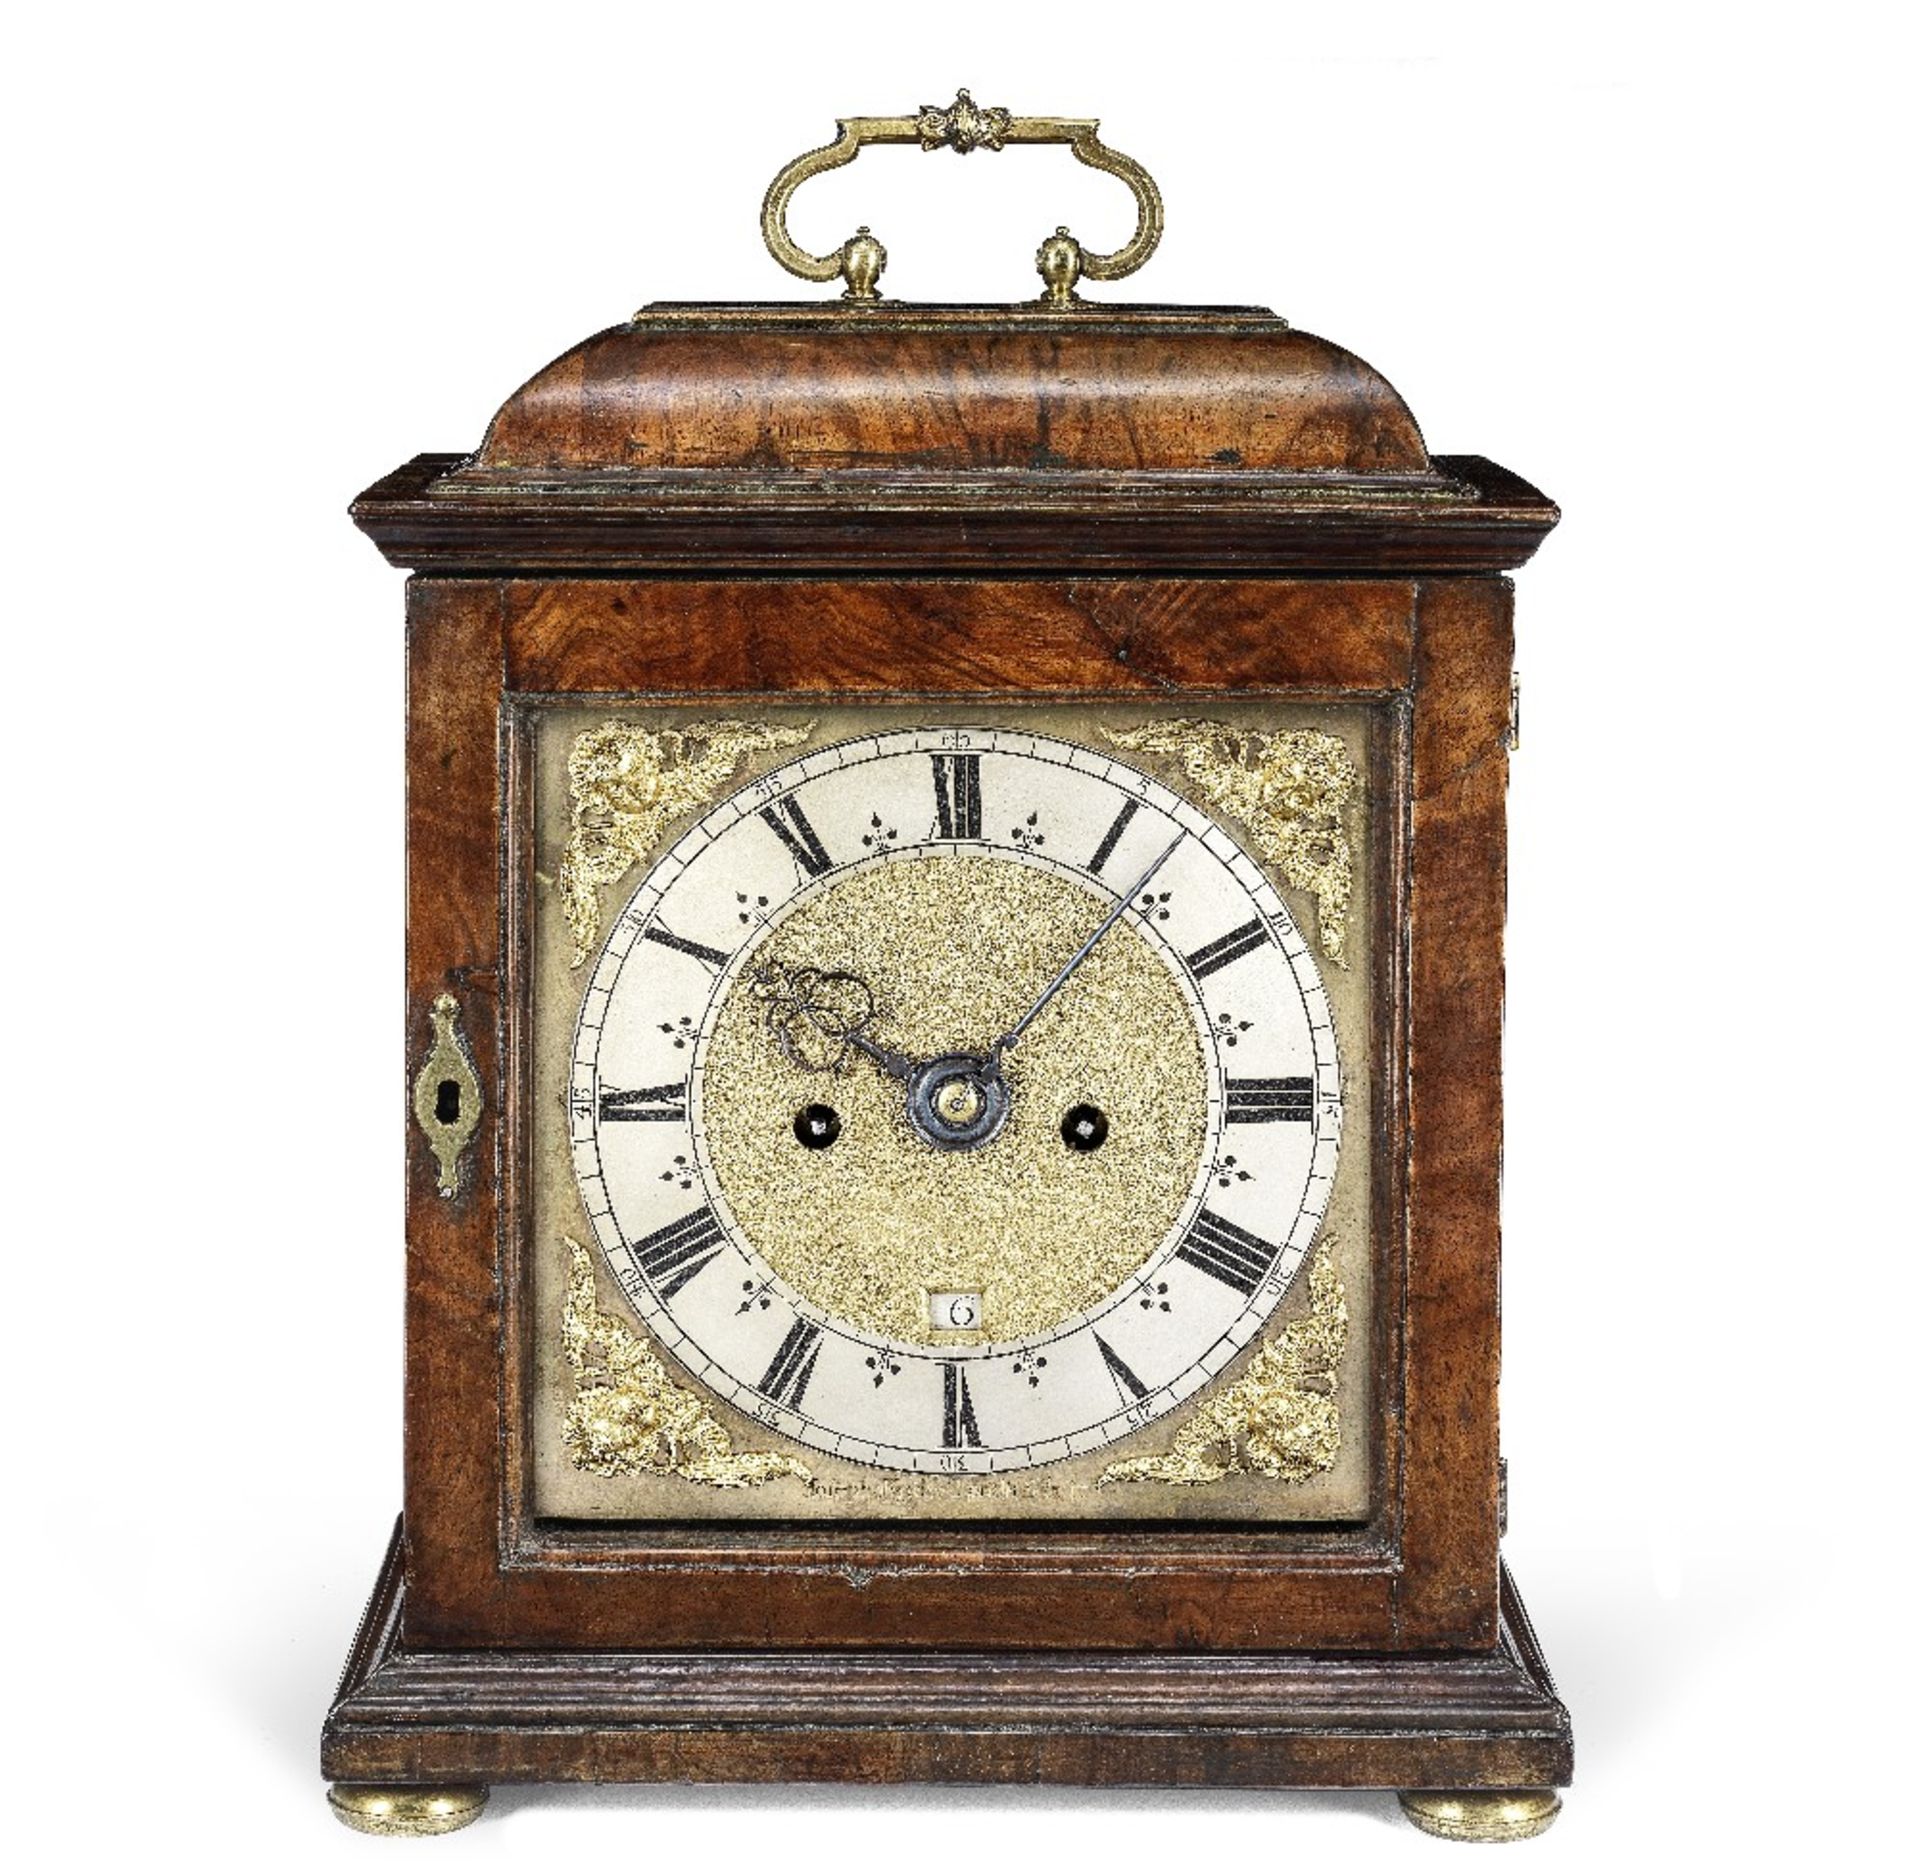 A late 17th century walnut veneered table Clock Joseph Knibb, Londini Fecit